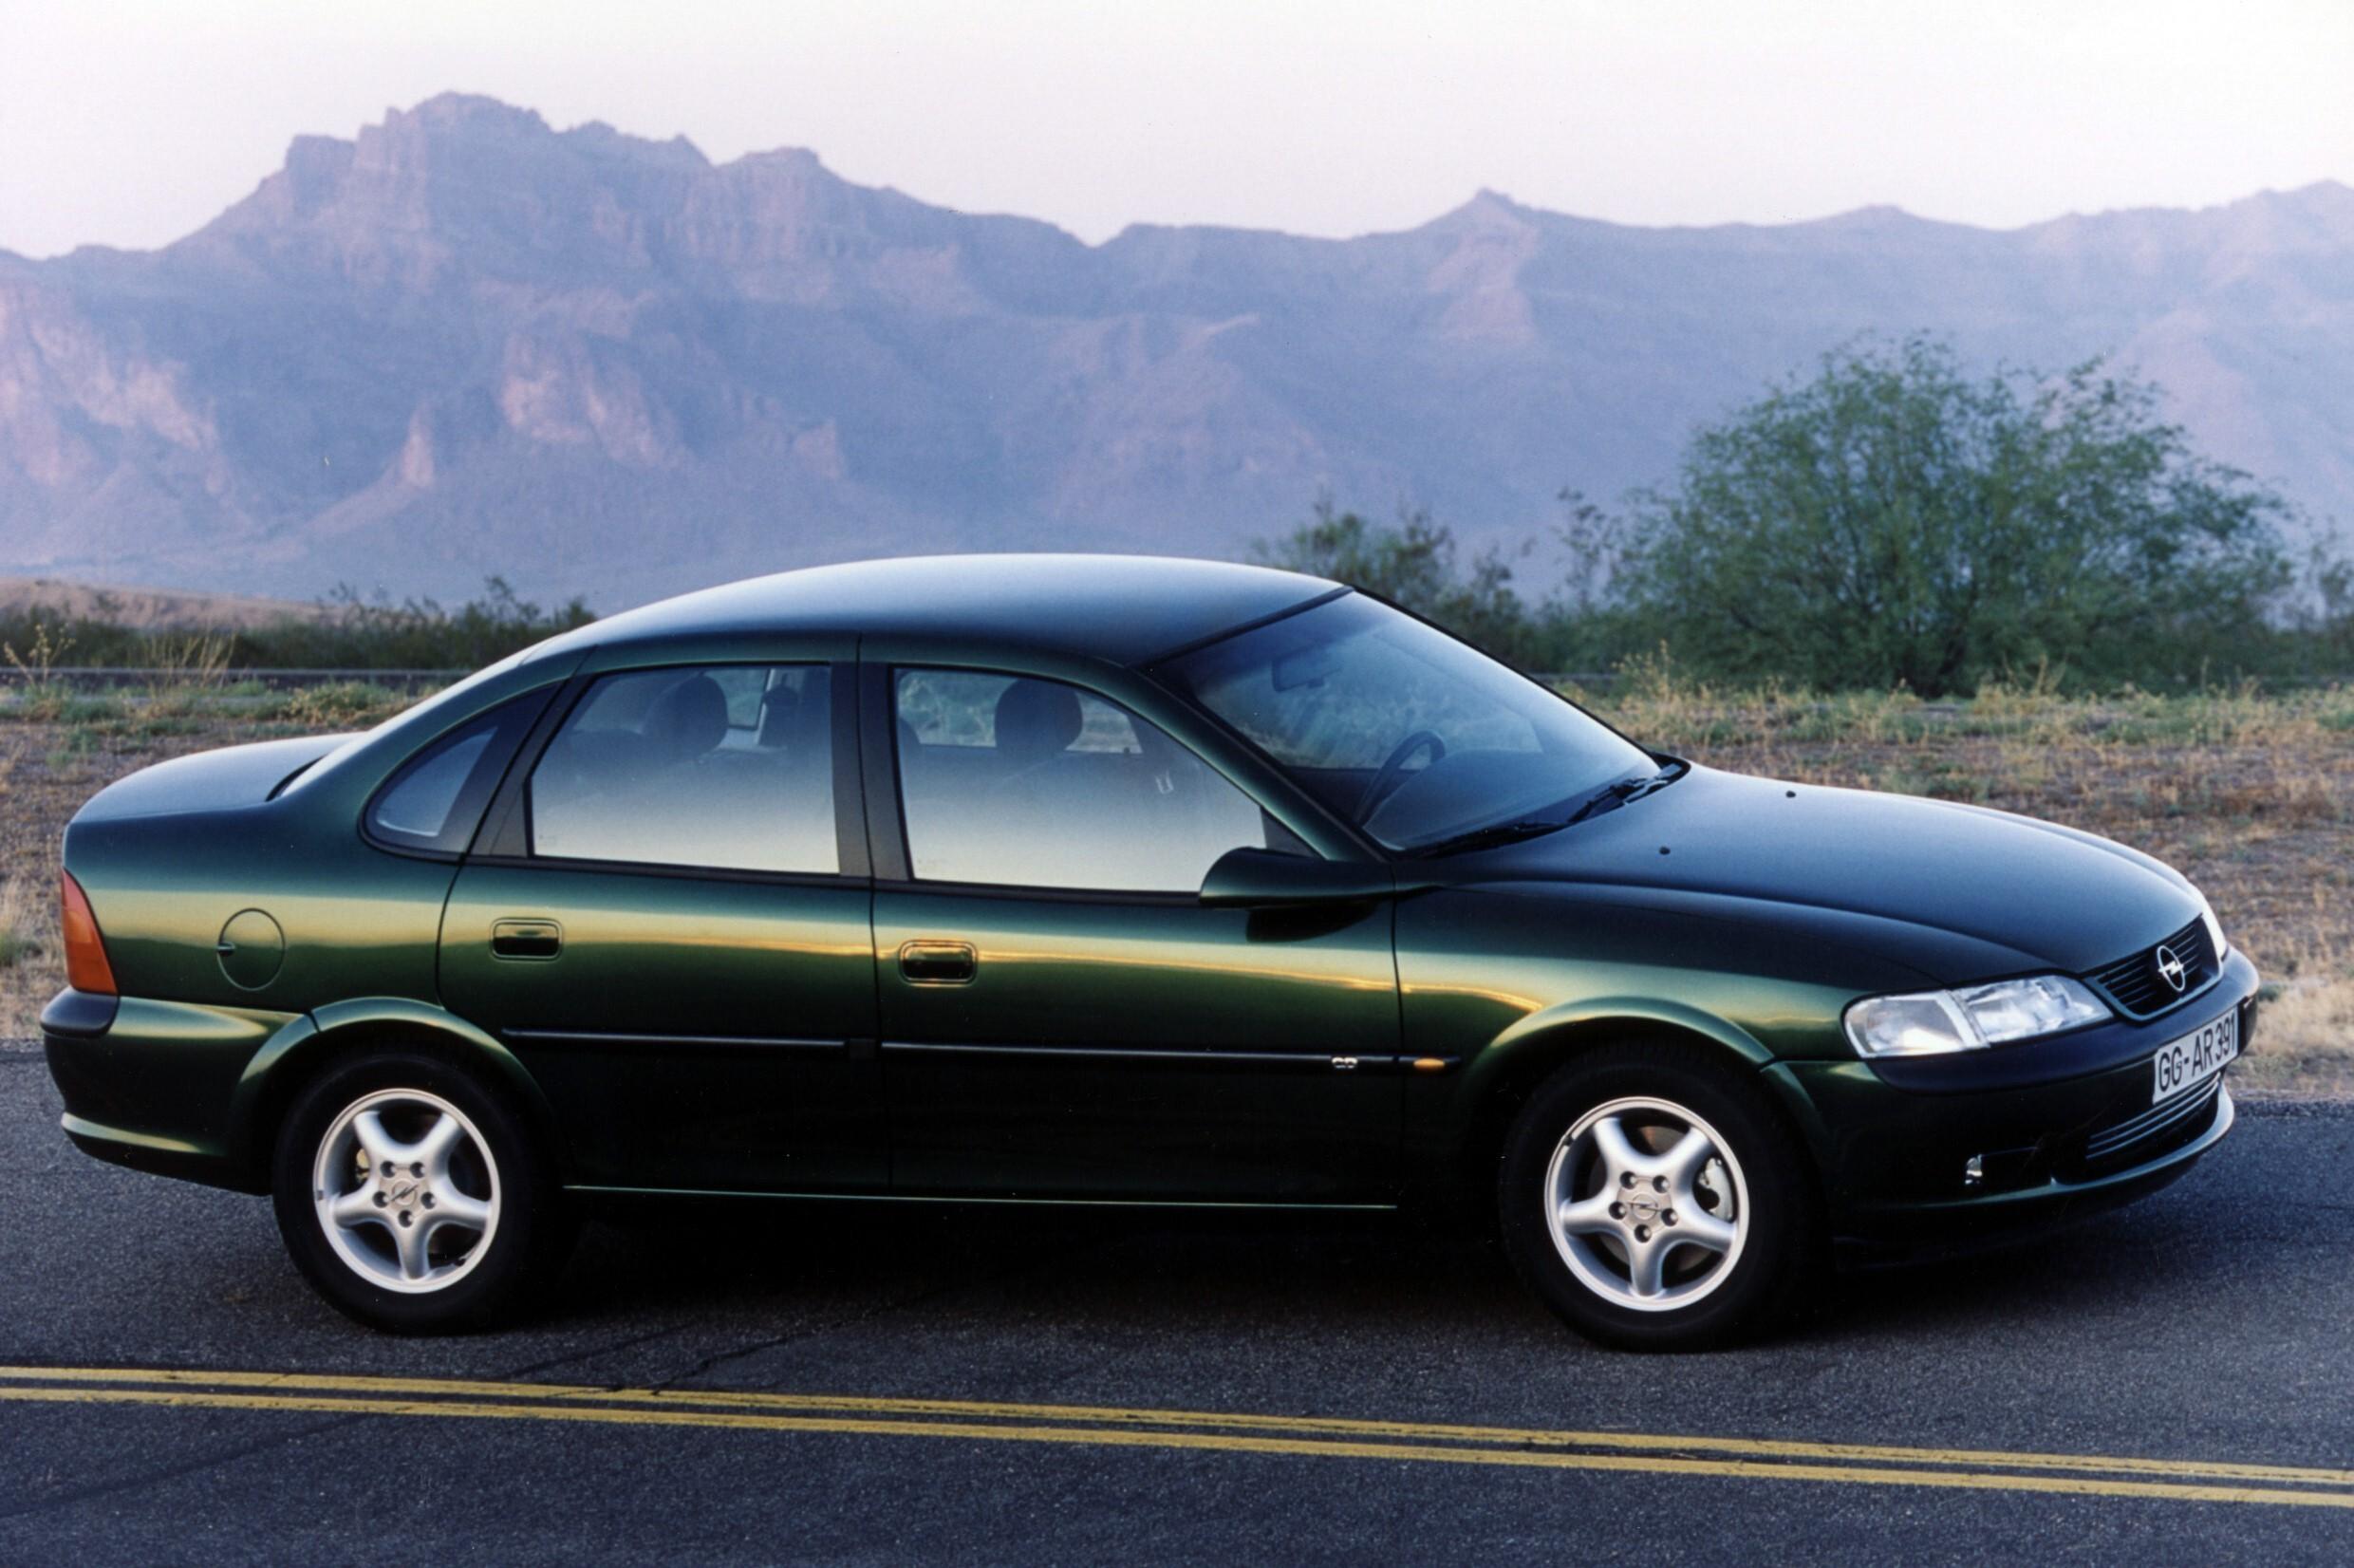 Купить вектра б 1.8. Opel Vectra b хэтчбек 1999. Opel Vectra, 1996 седан. Опель Вектра седан 1996. Опель Вектра б 1.6 1996.